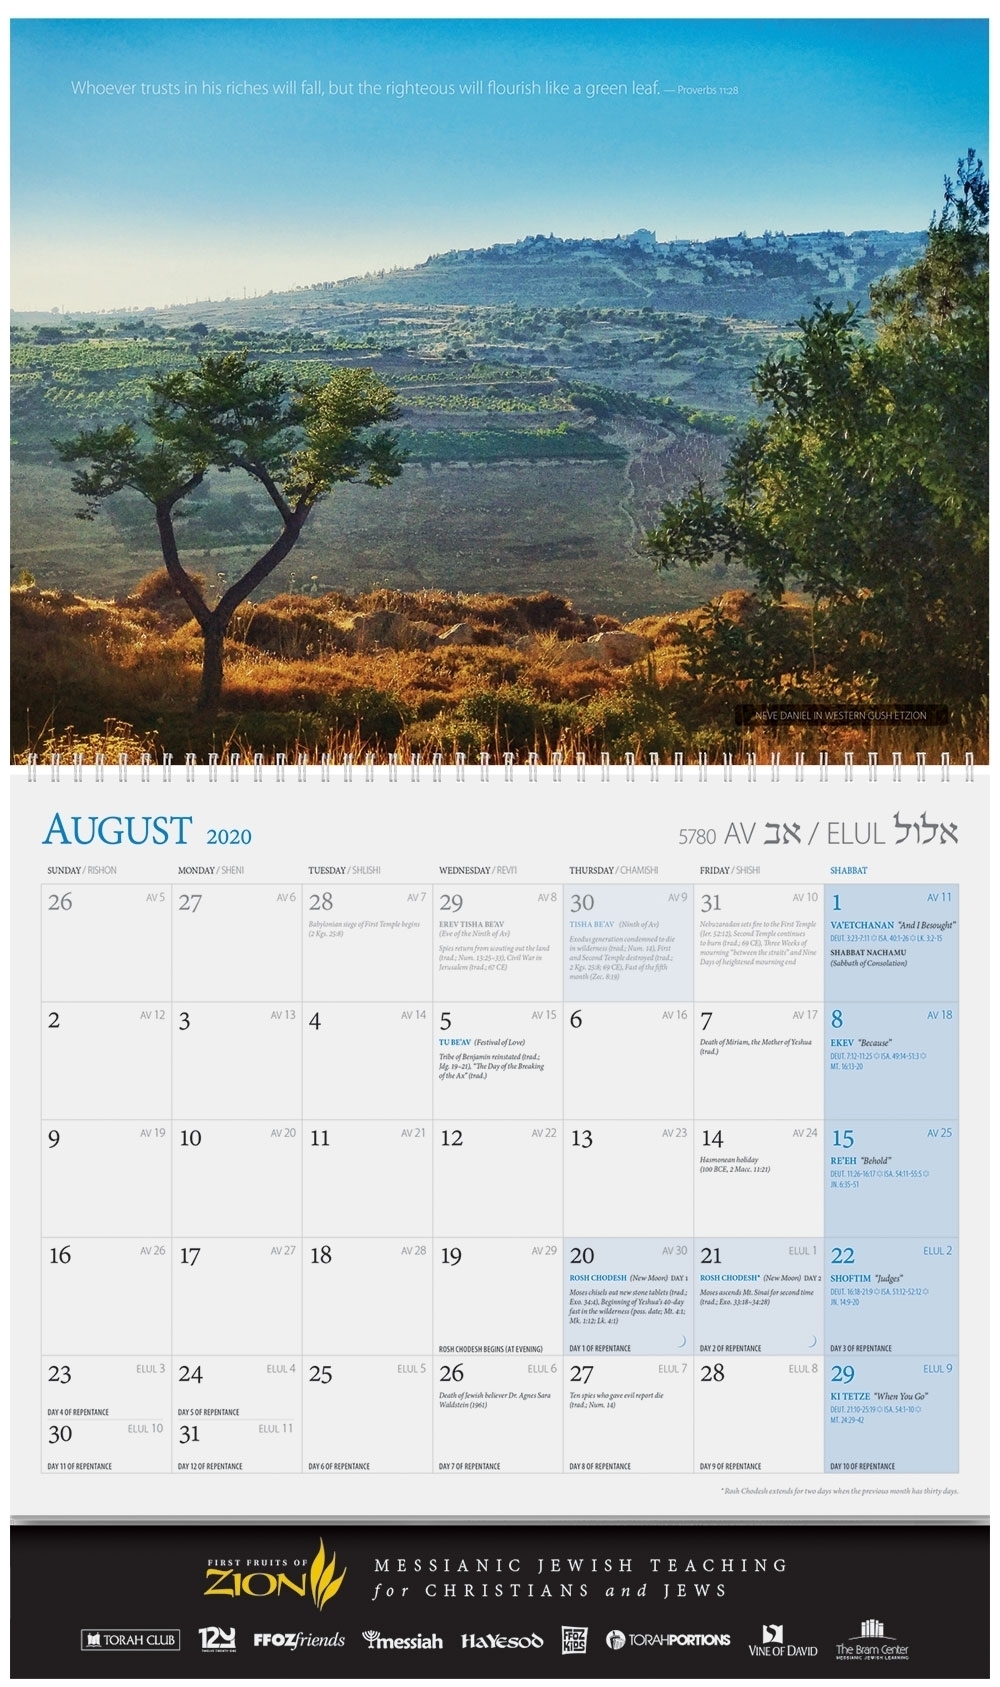 Weekly Torah Parsha Calendar For 2019/2020 - Calendar with Torah Portions For 2019 And 2020